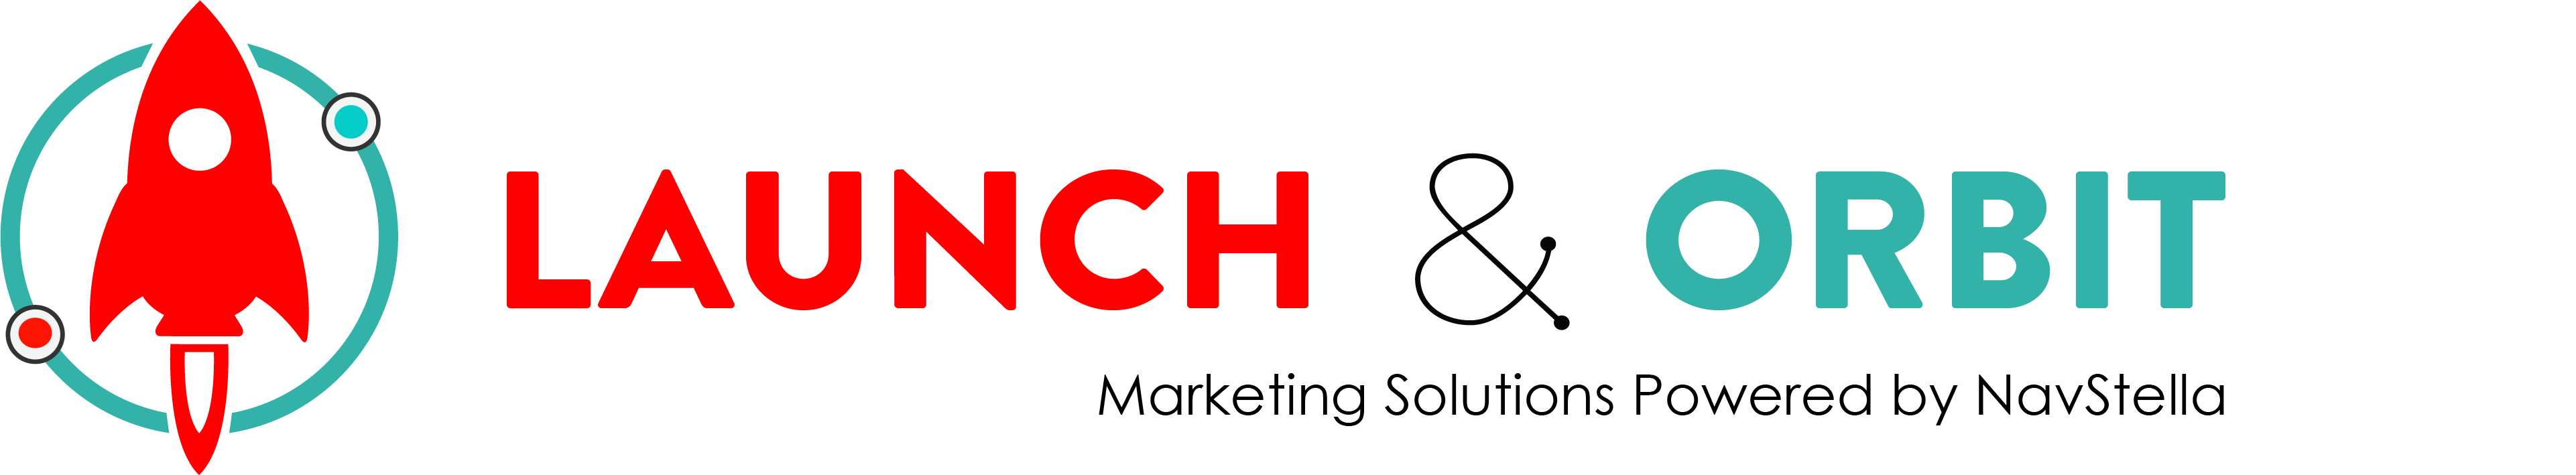 launch and orbit logo